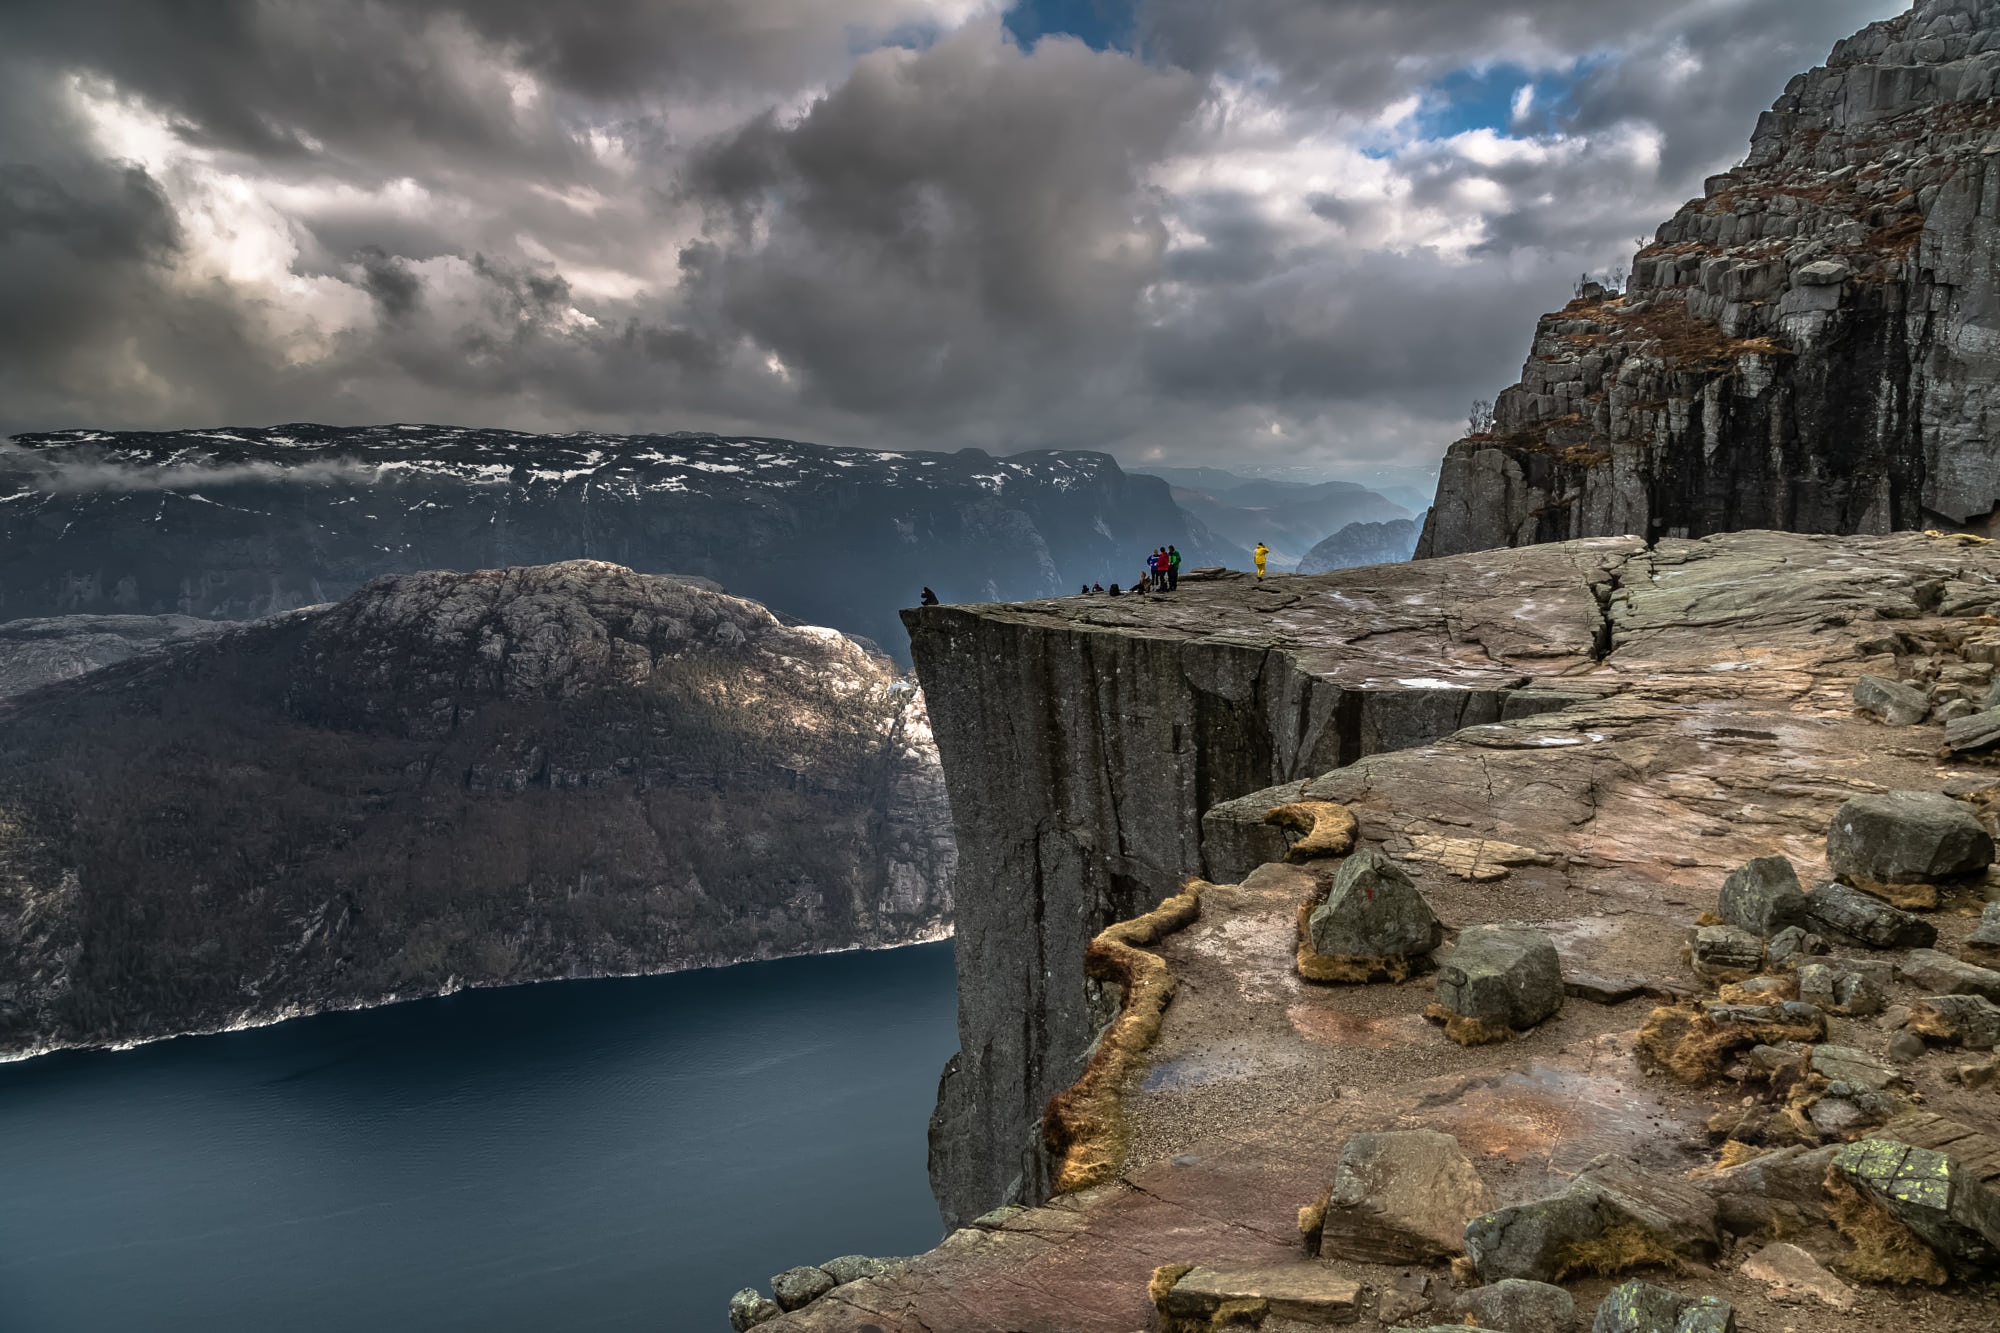 General 2000x1333 nature mountains landscape Norway cliff rocks gray Preikestolen